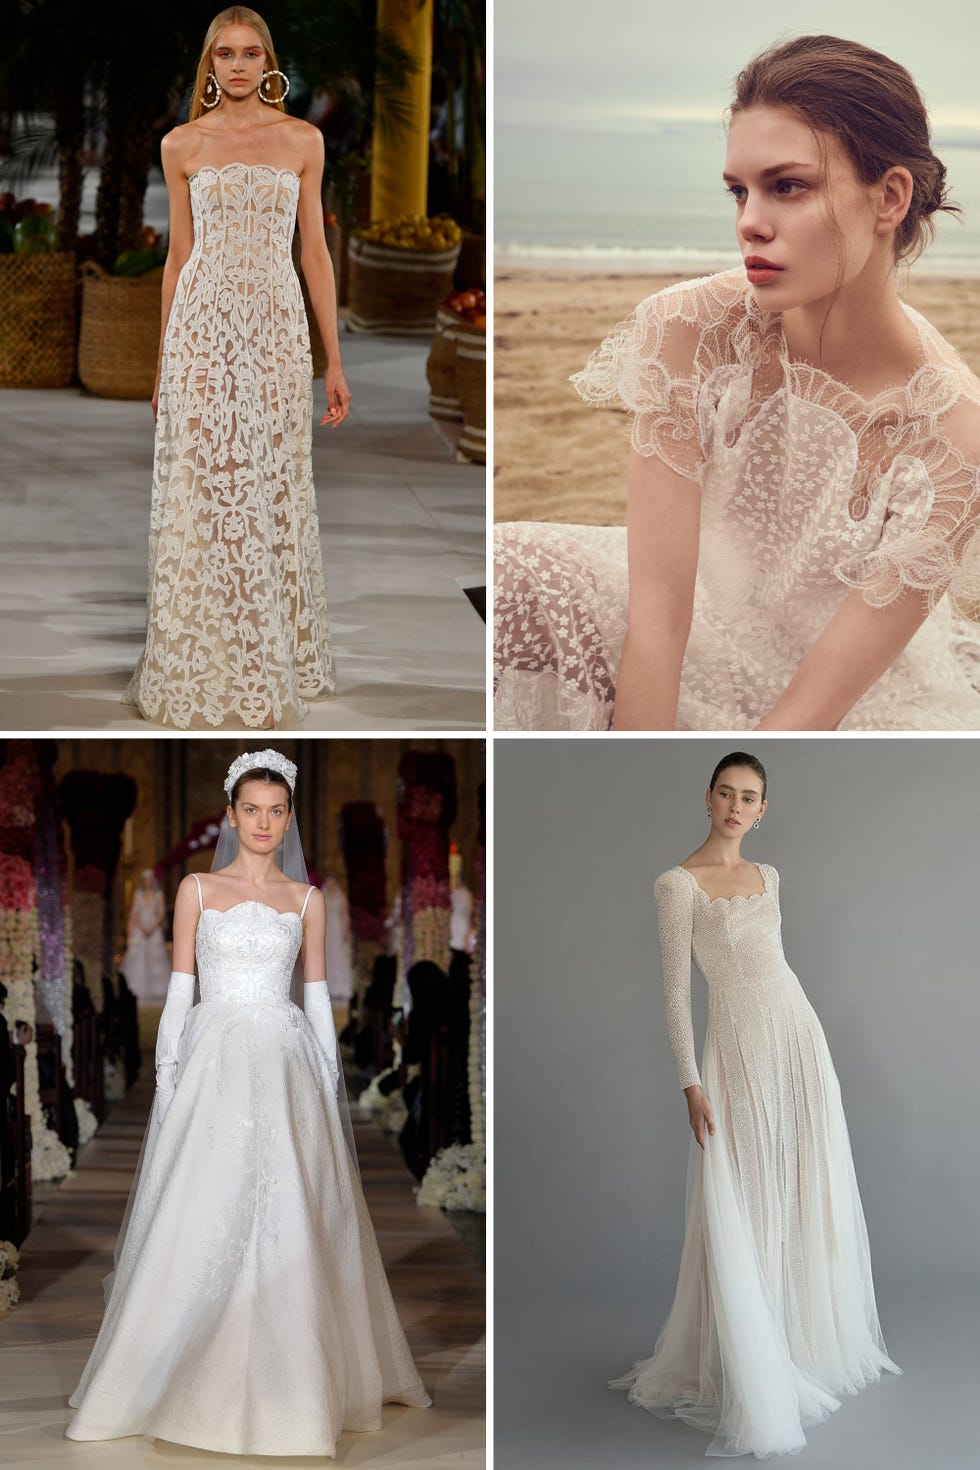 Bridal Fashion Week 2020: Next Year's Top Looks